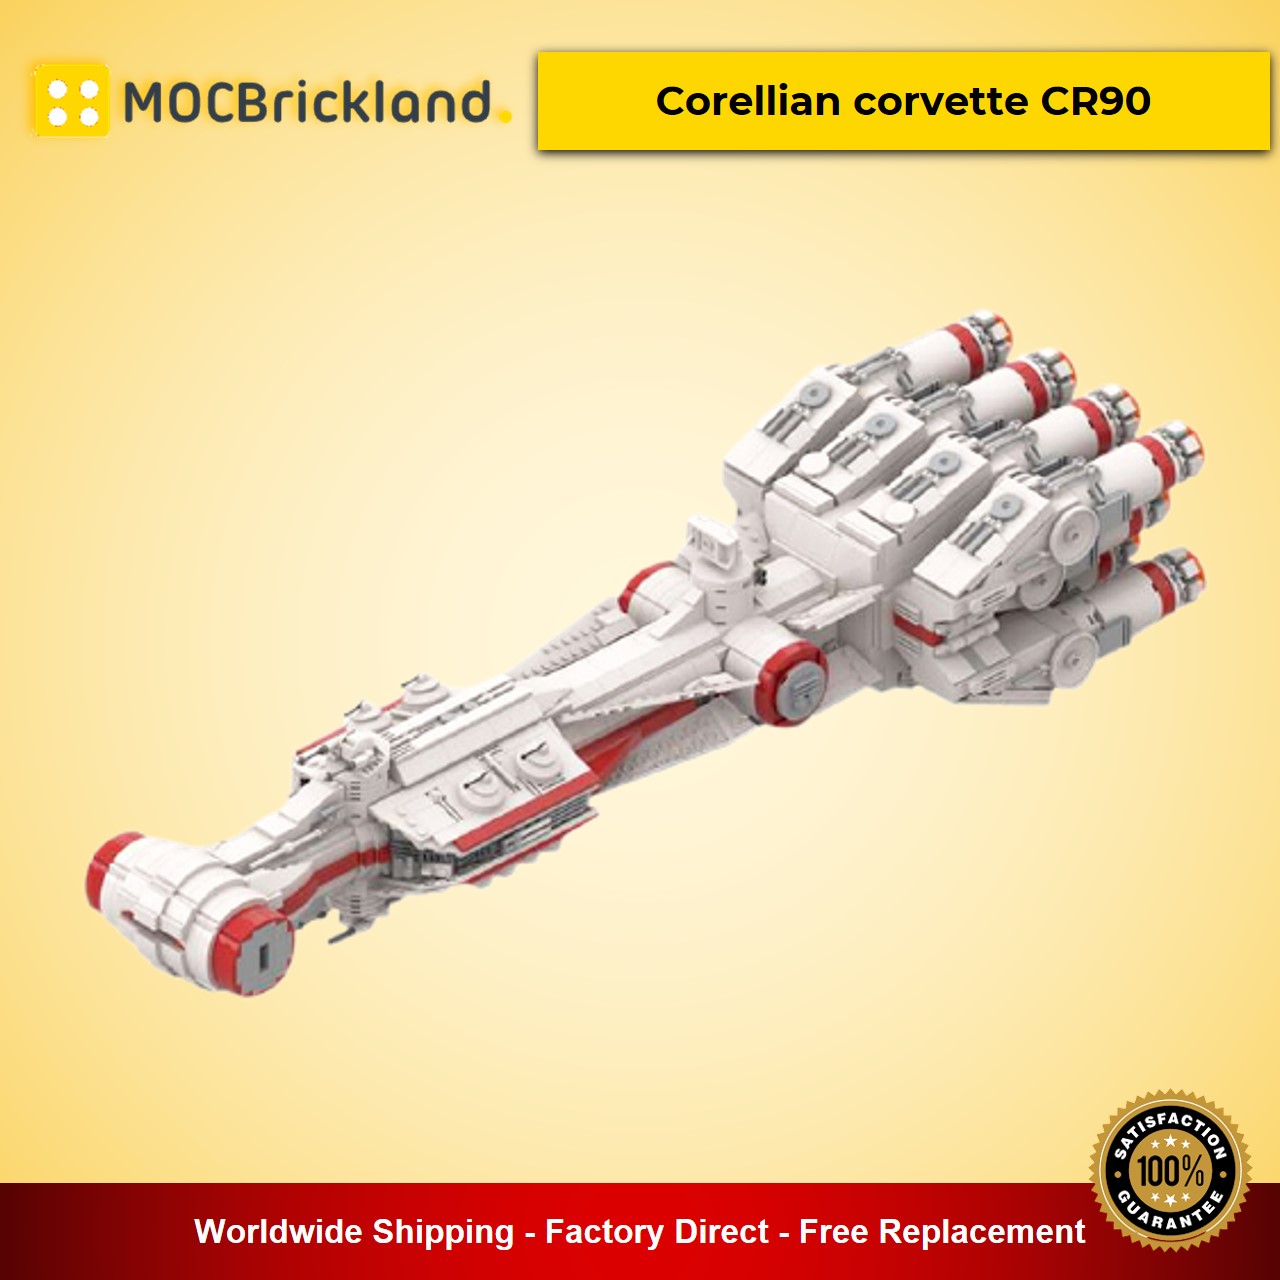 star wars moc 37561 corellian corvette cr90 by mechael mocbrickland 7887